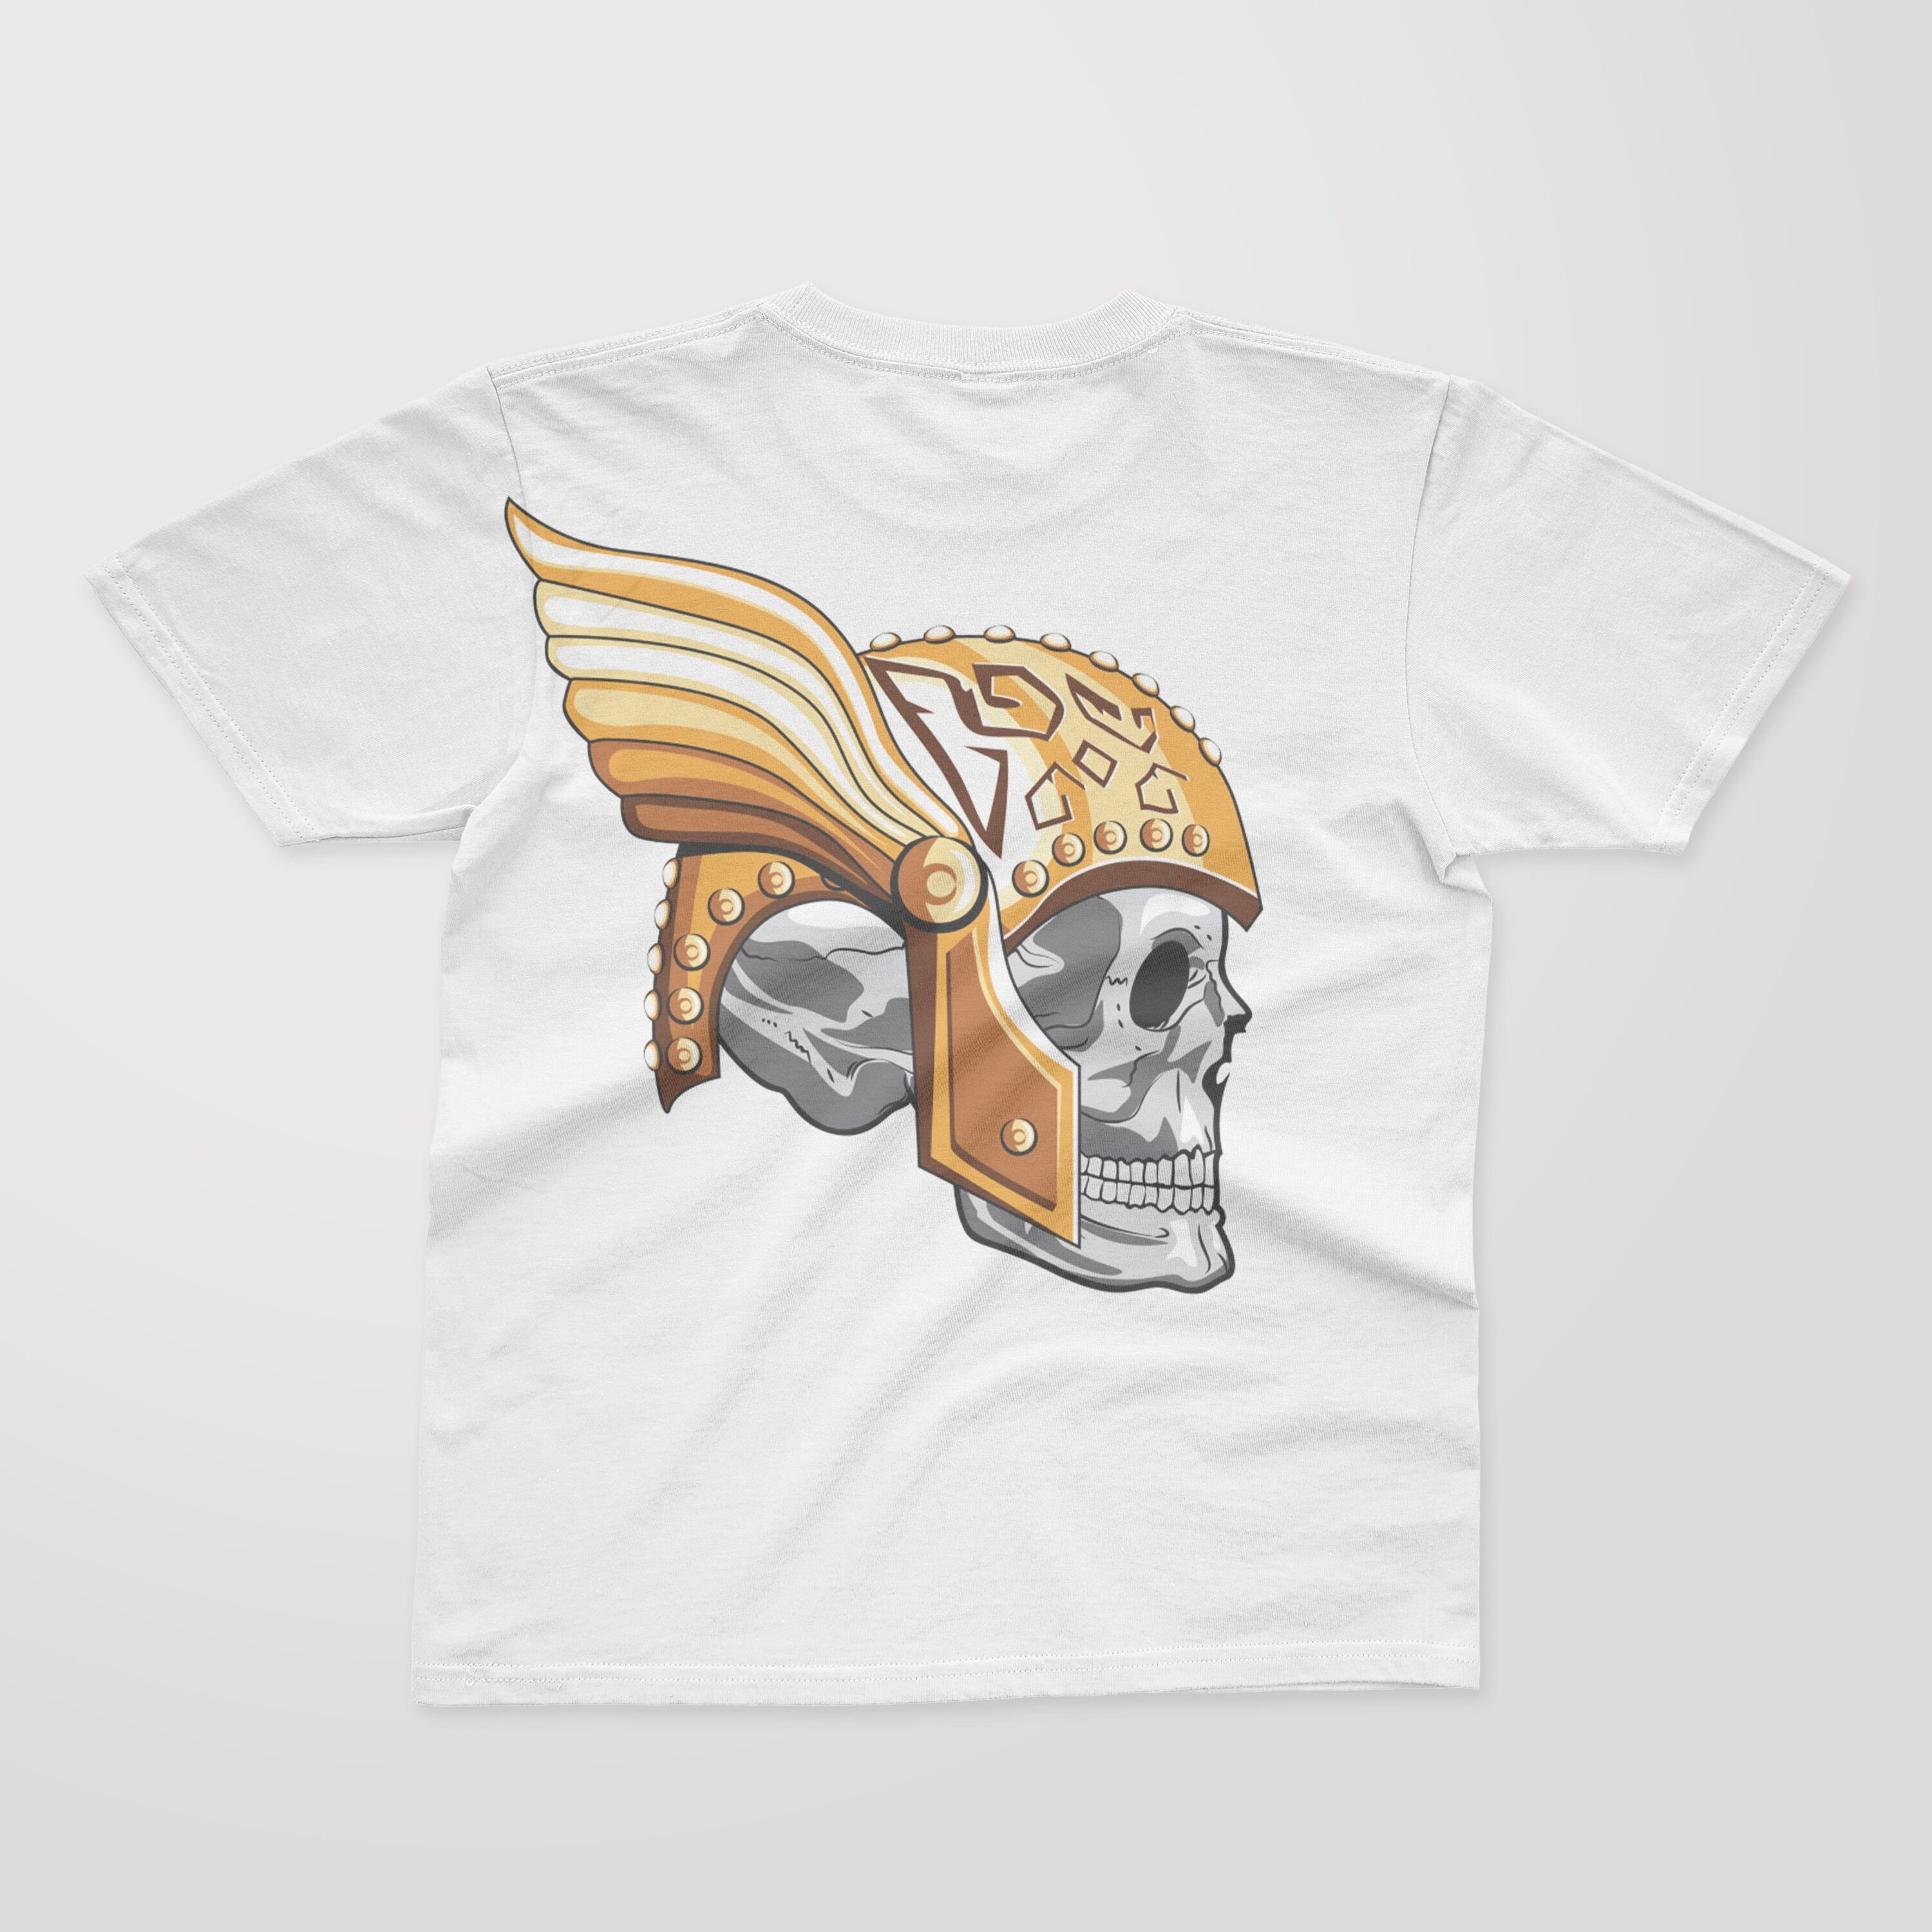 Stylish viking's skull for the classic t-shirt.